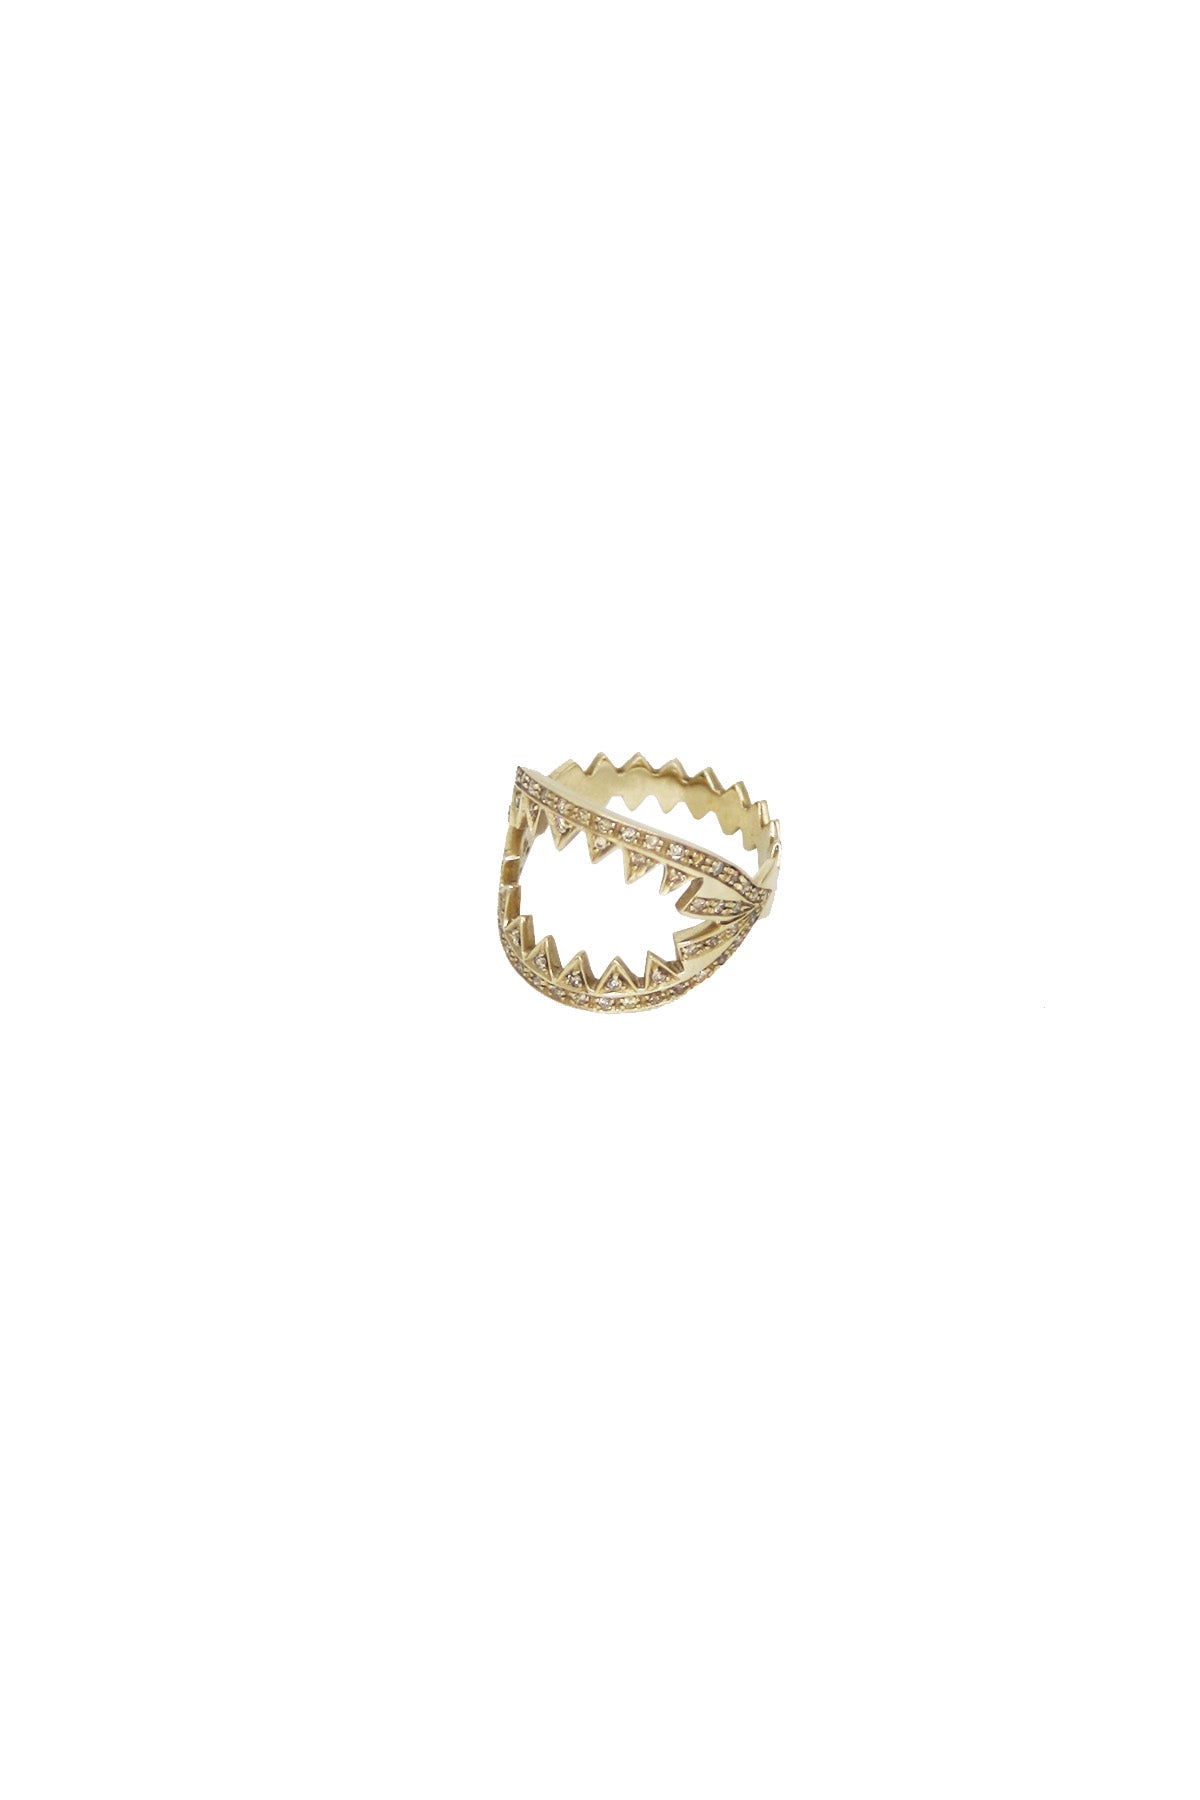 White Gold Shark Ring With White Diamonds